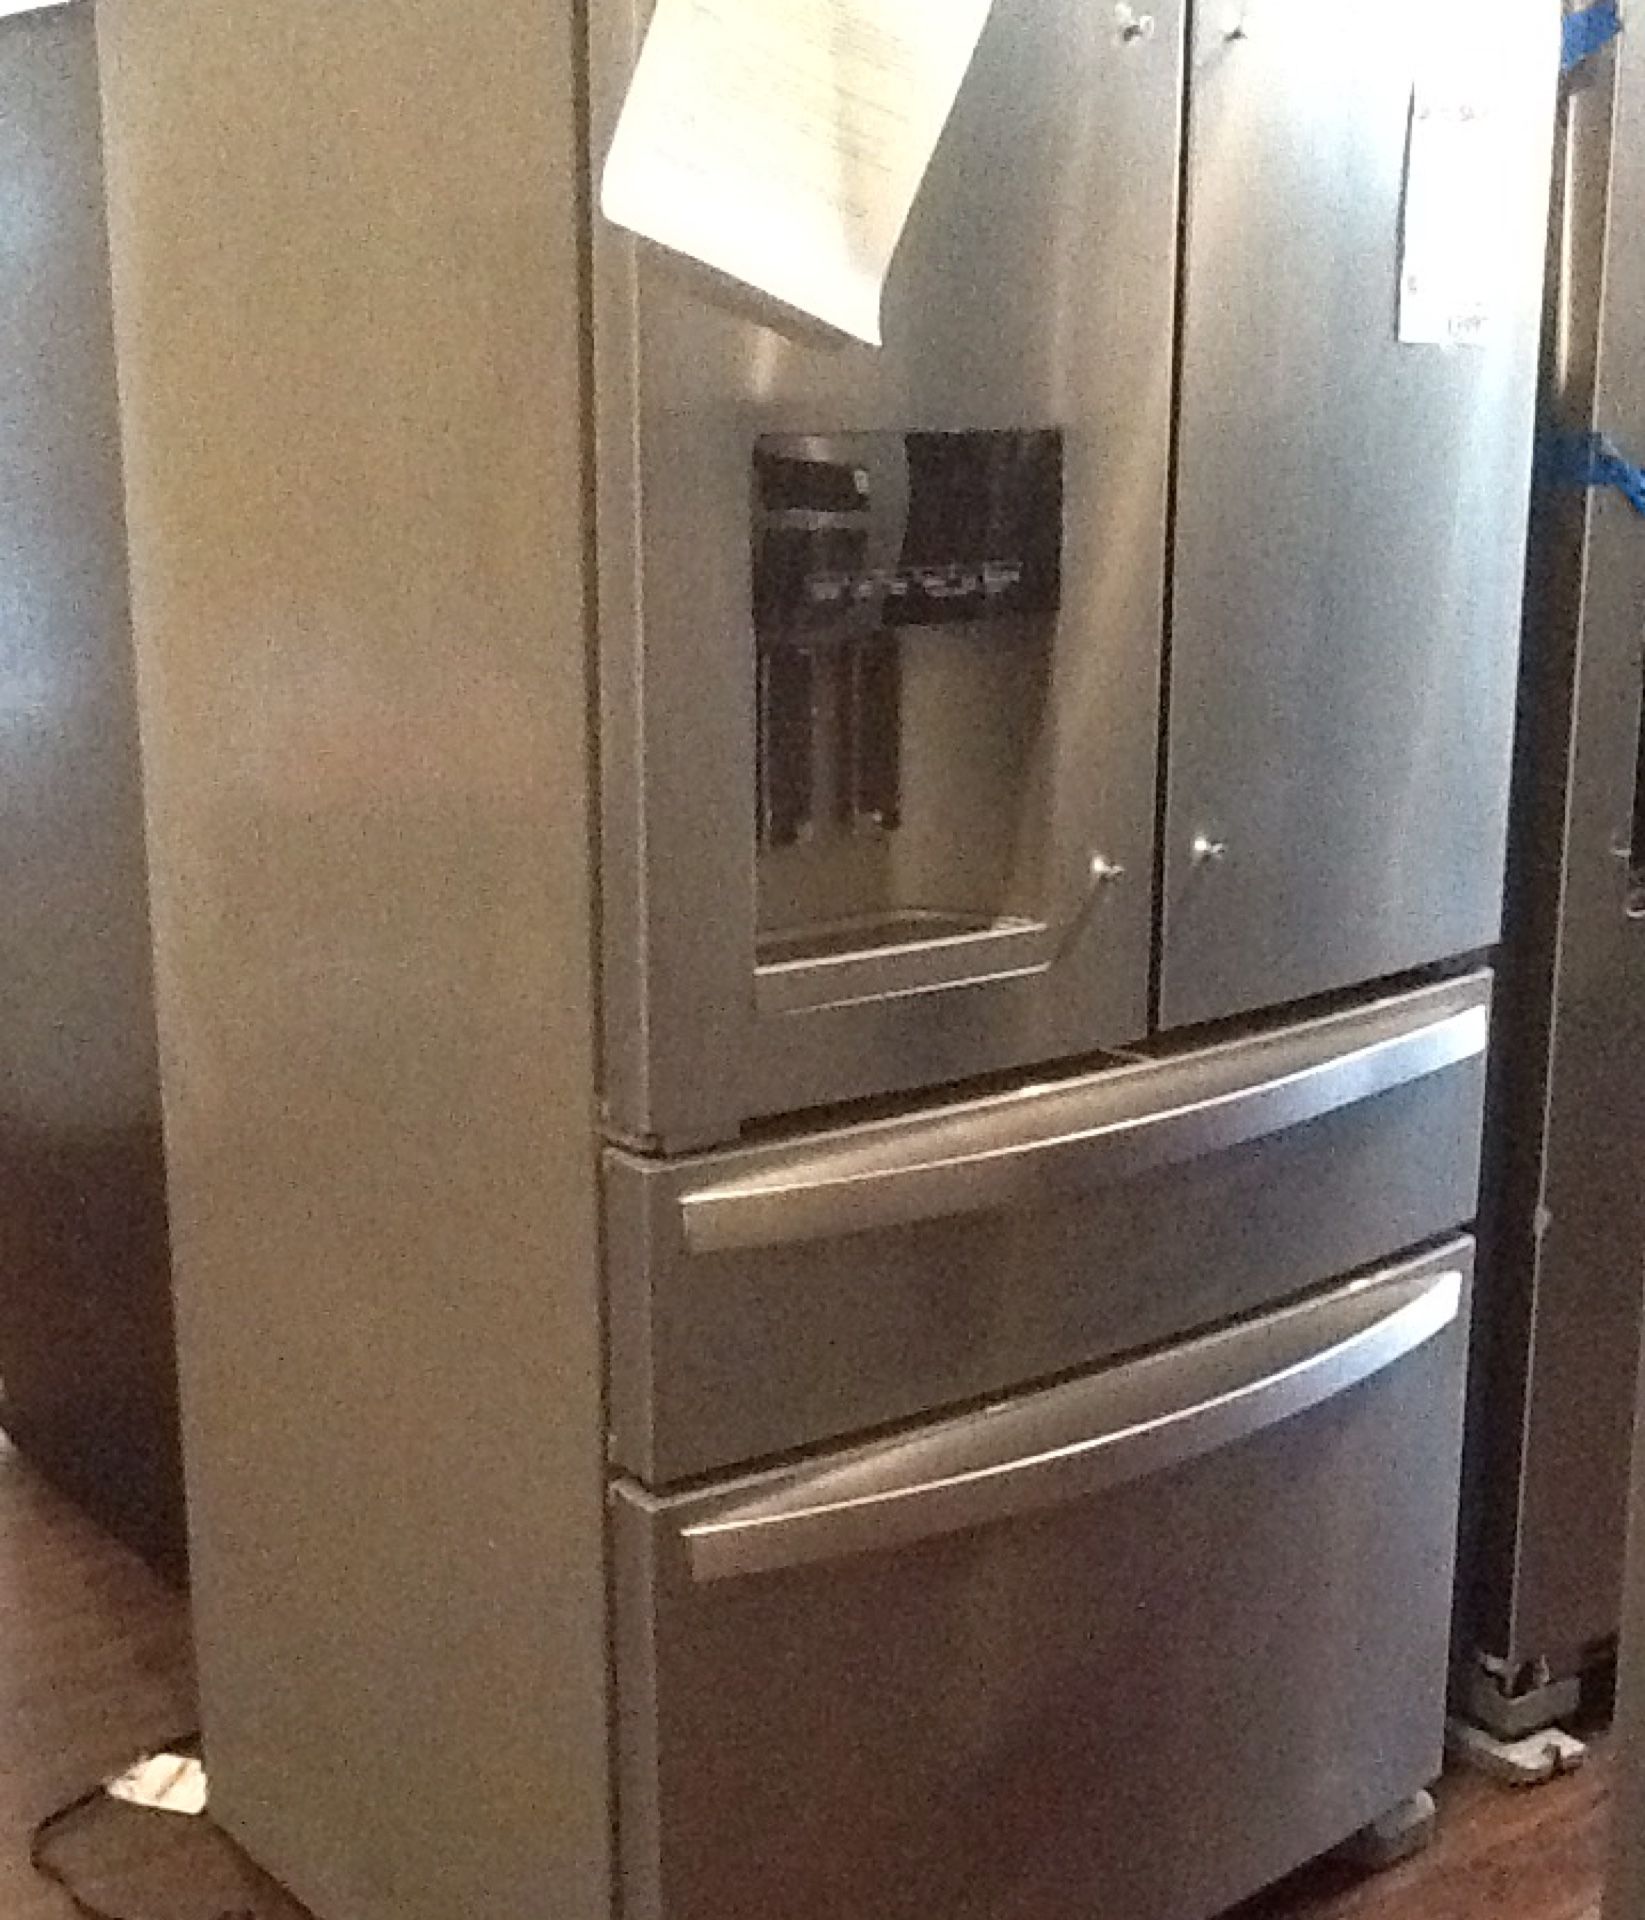 New open box whirlpool refrigerator WRX735SDHZ